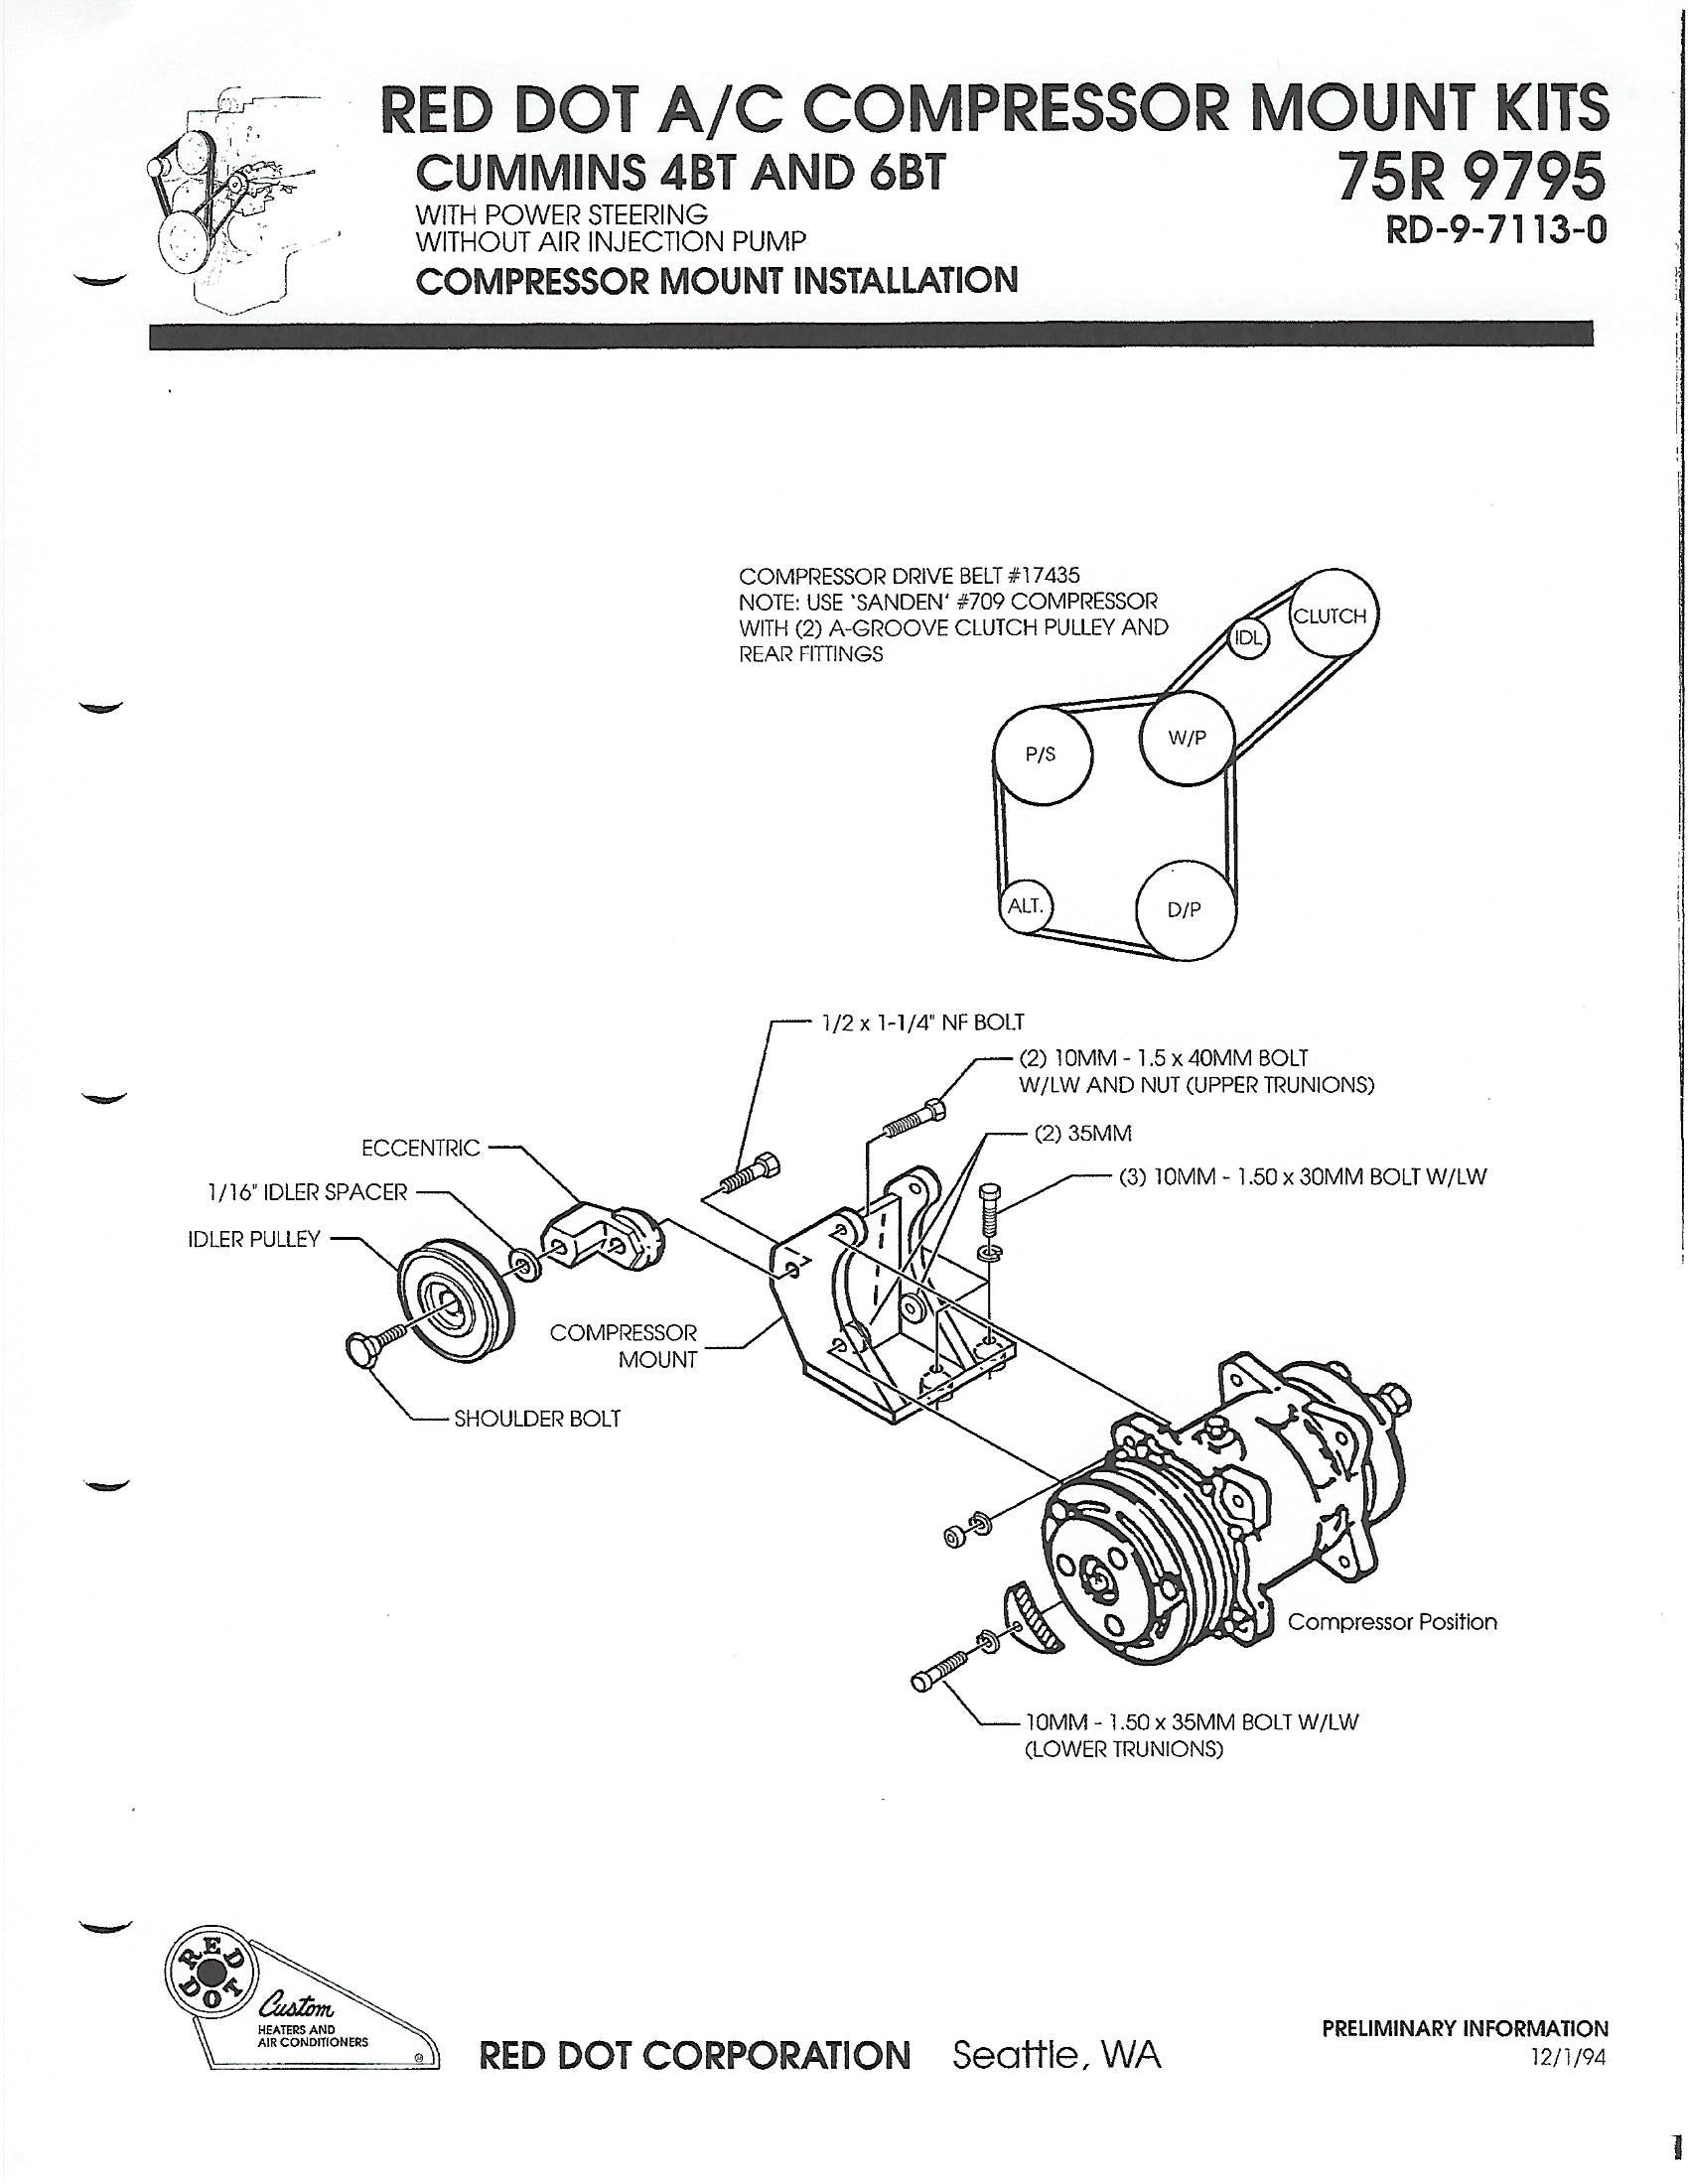 Ac Compressor Mount Kit For Cummins 4Bt 6Bt Engines 75R9795 Mounting